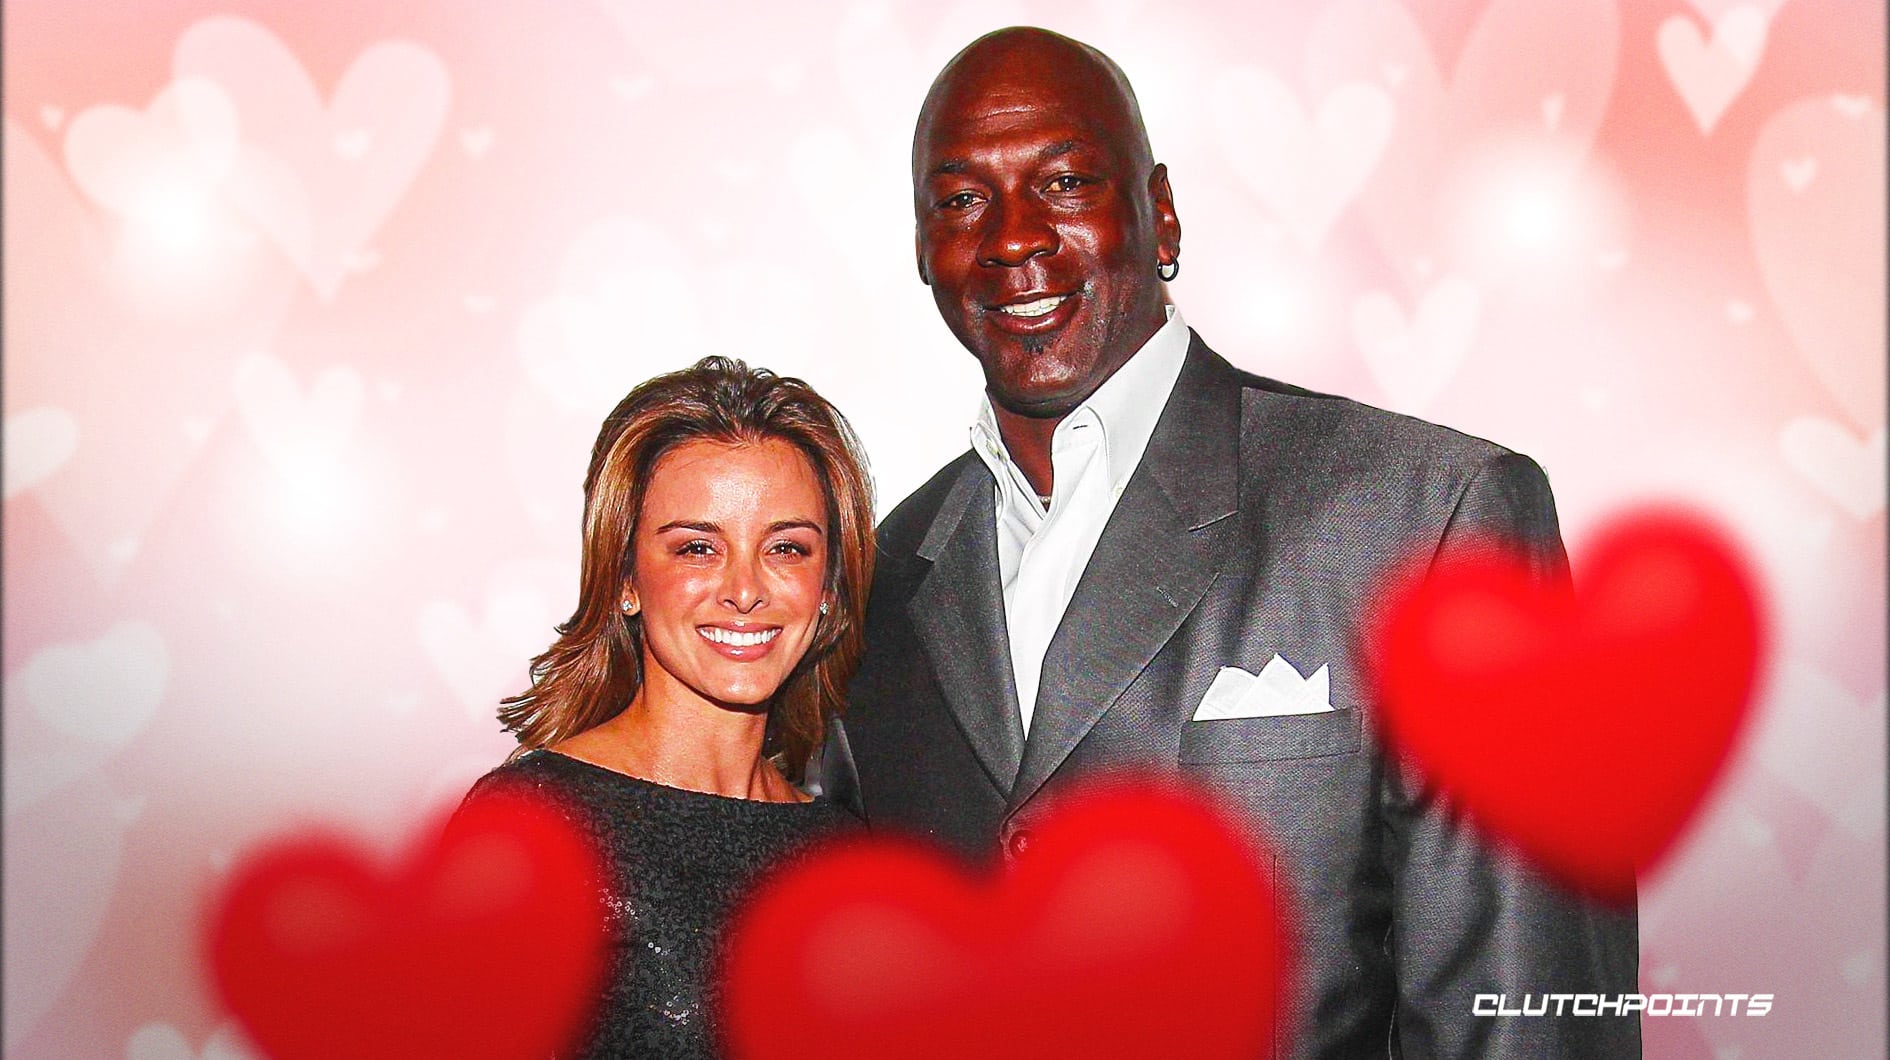 LOOK: Michael Jordan and his wife Yvette Prieto through the years